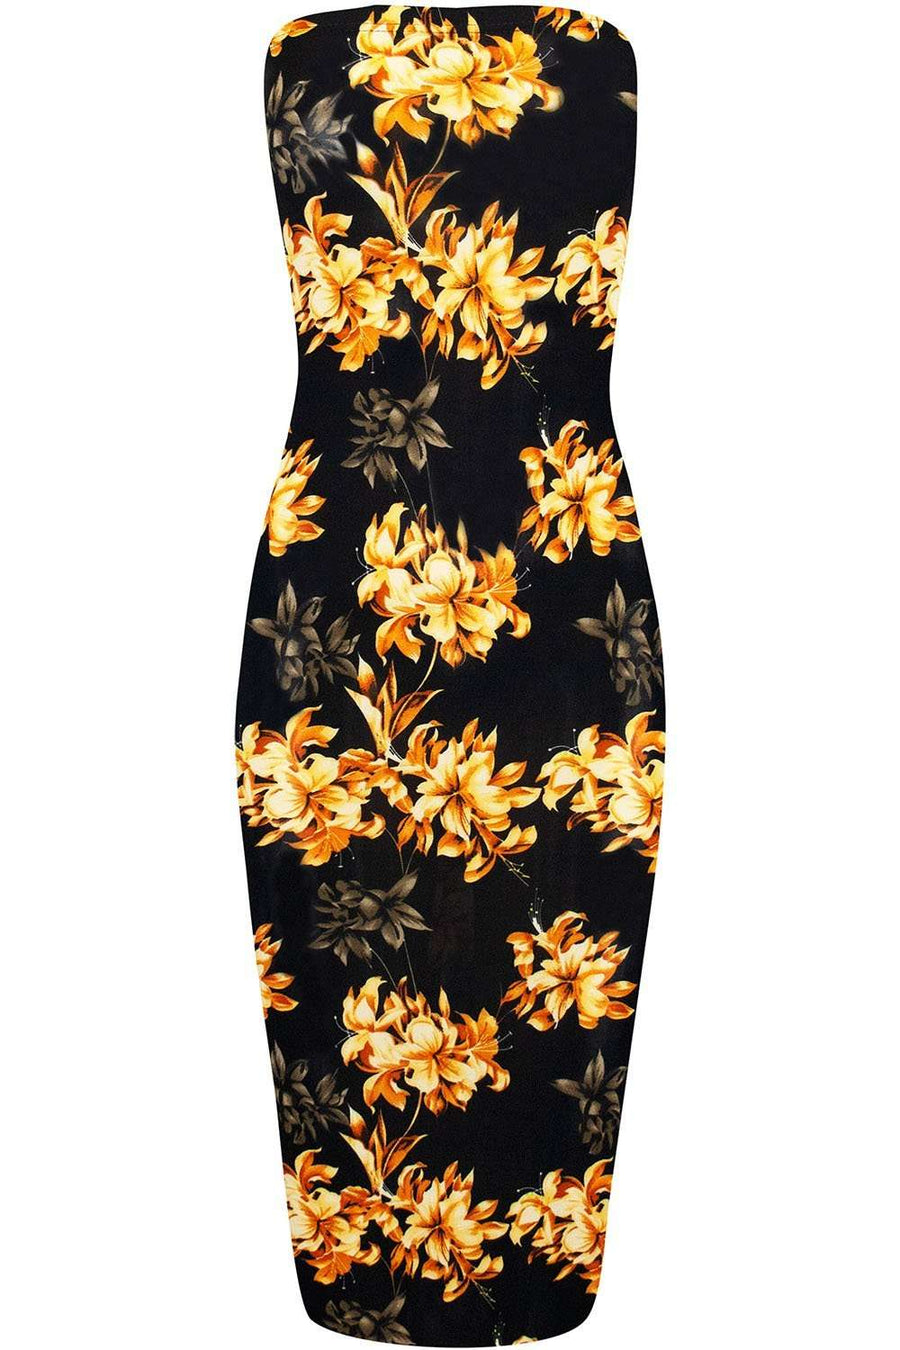 Tropical Print Bandeau Yellow Floral Midi Tube Dress - bejealous-com